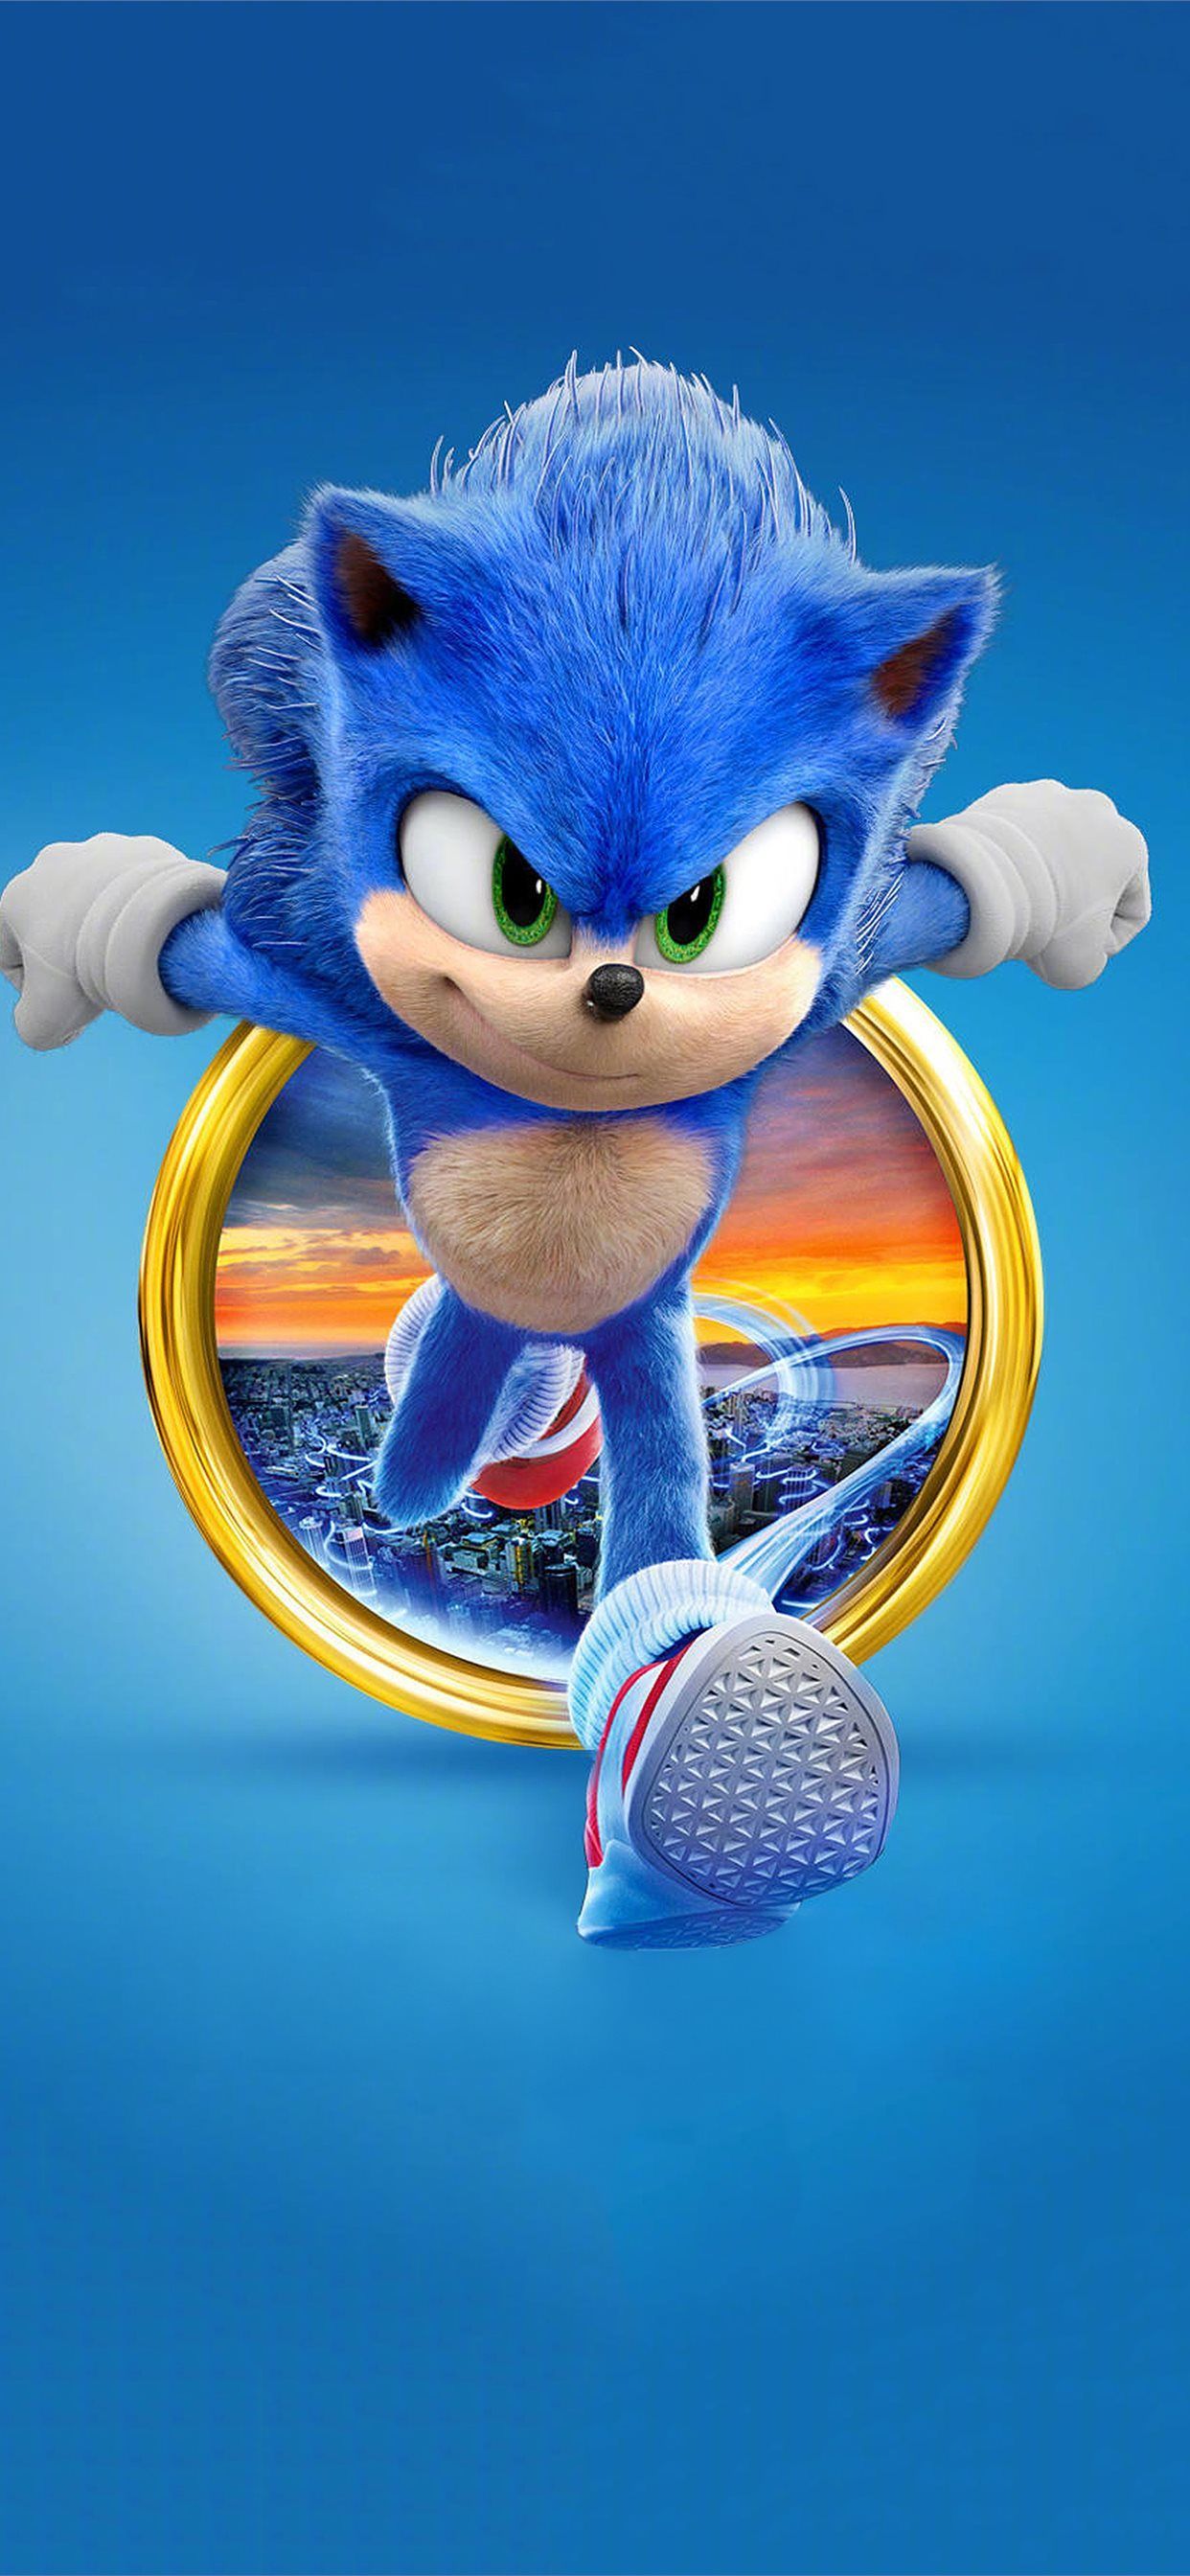 Sonic The Hedgehog Phone Wallpaper Free Sonic The Hedgehog Phone Background